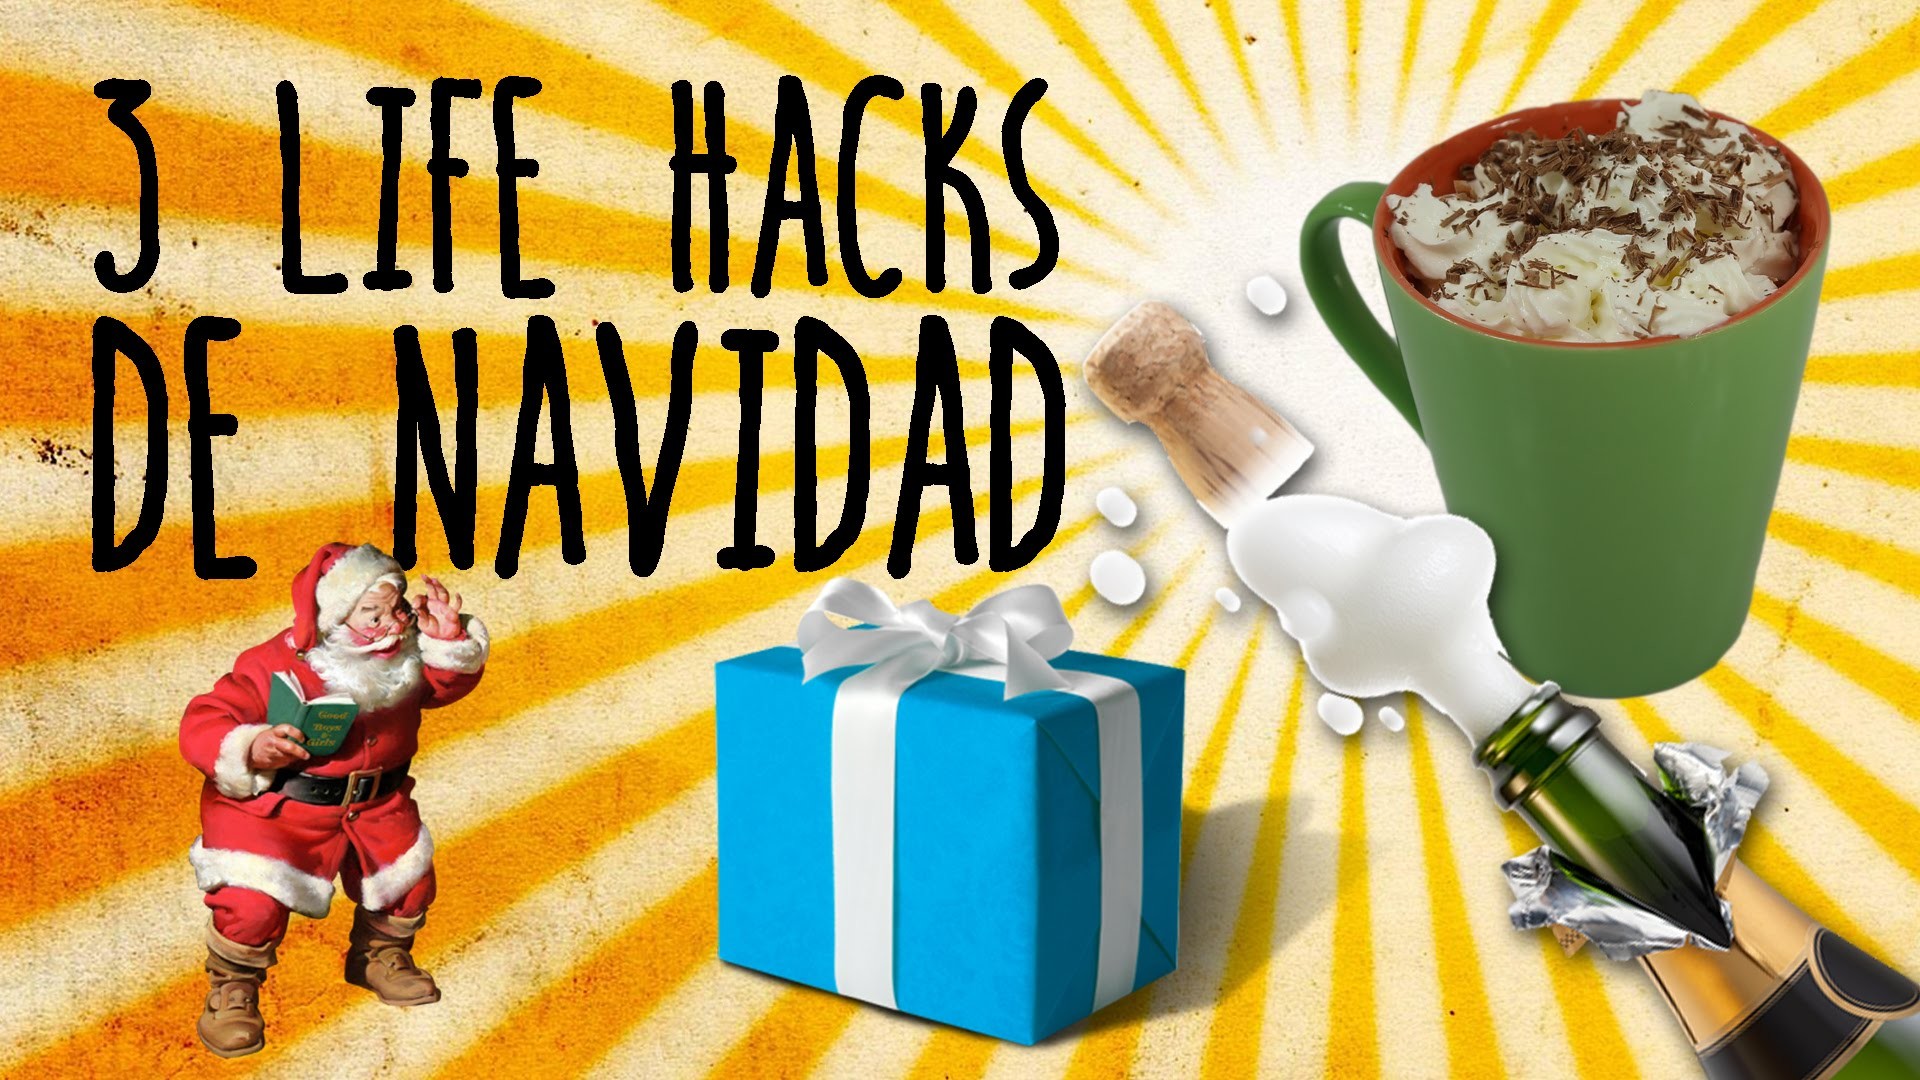 3 life hacks de Navidad - Trucos Navideños